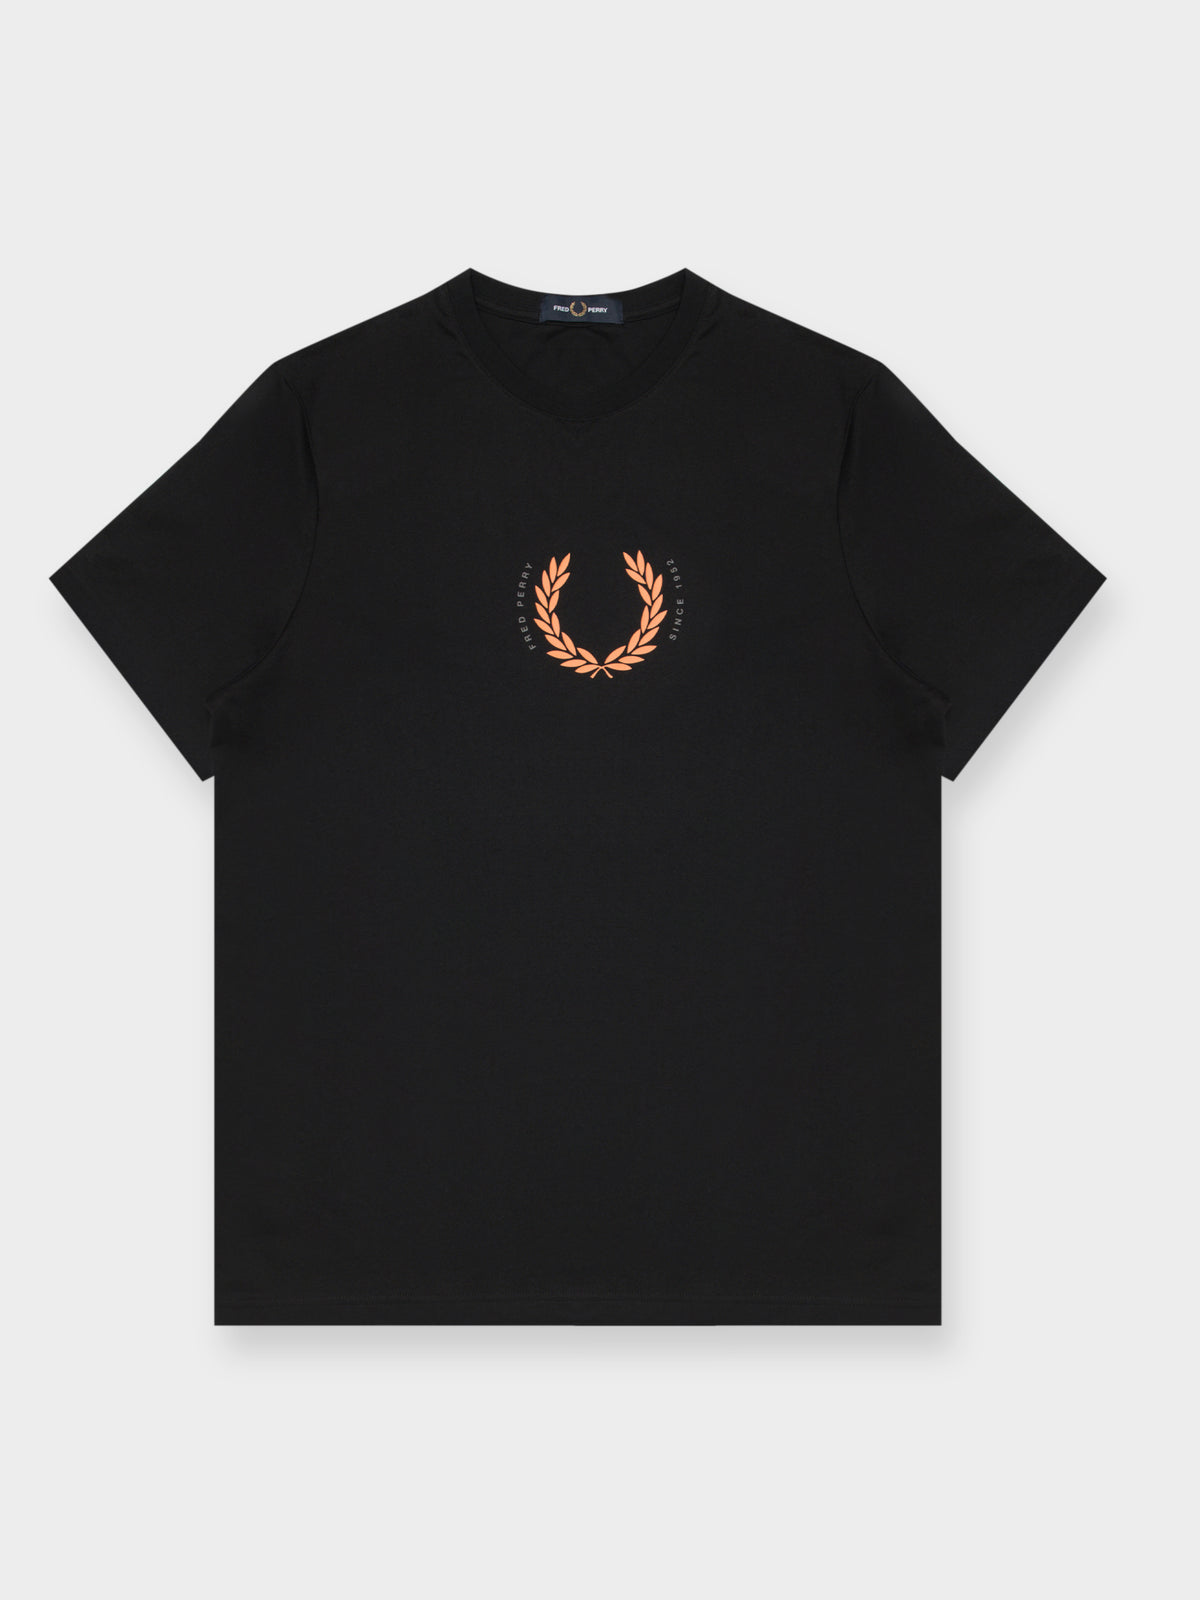 Laurel Wreath T-Shirt in Black